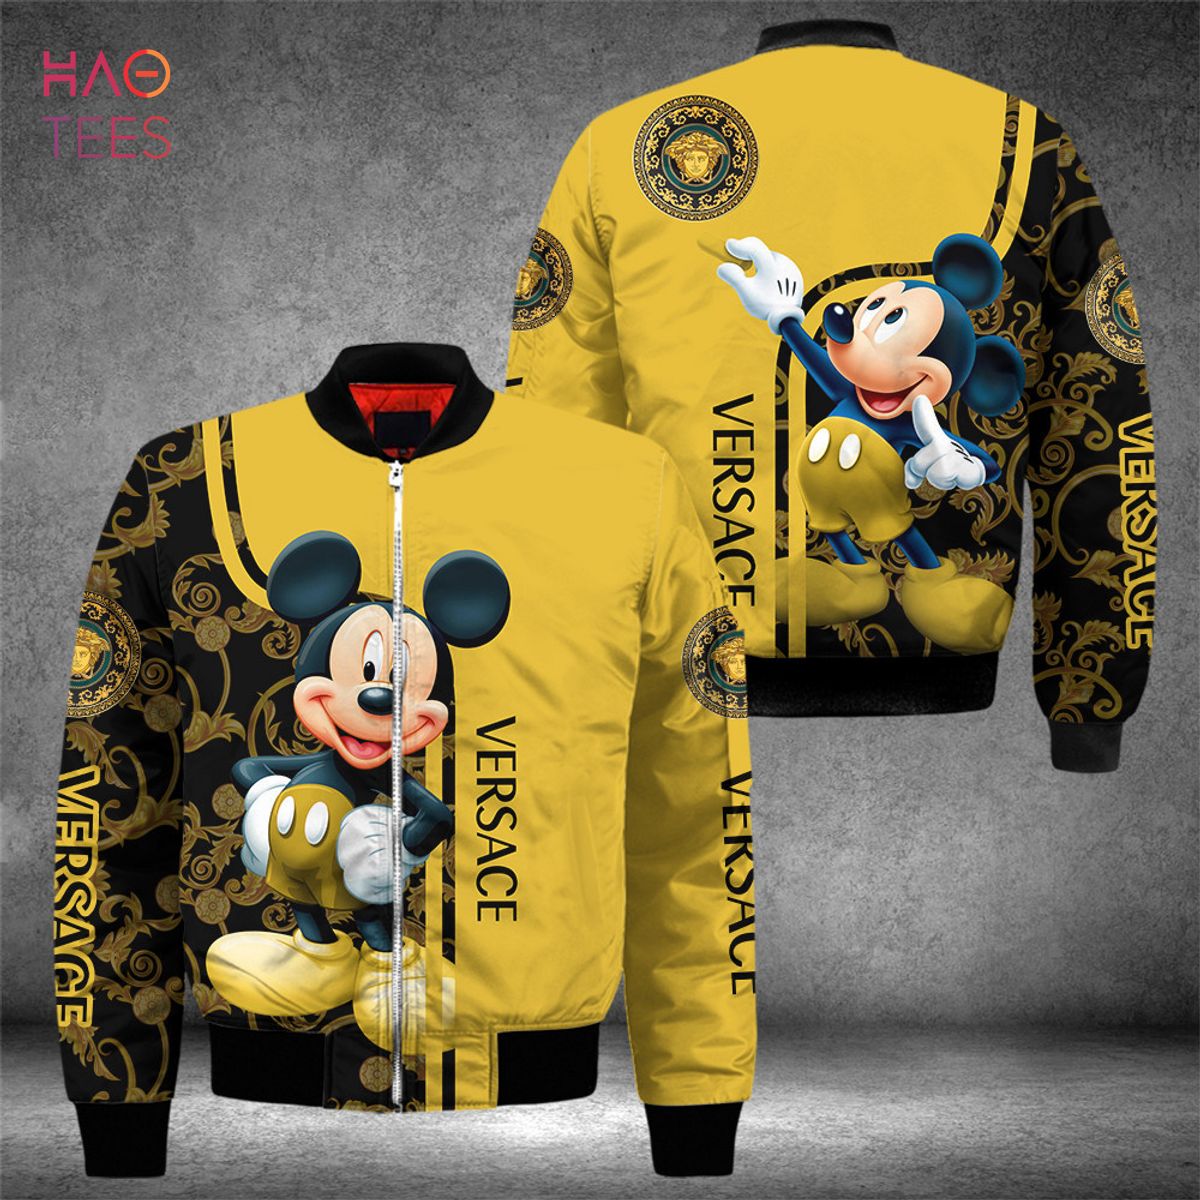 HOT Versace Luxury Brand Mickey Mouse Bomber Jacket POD Design